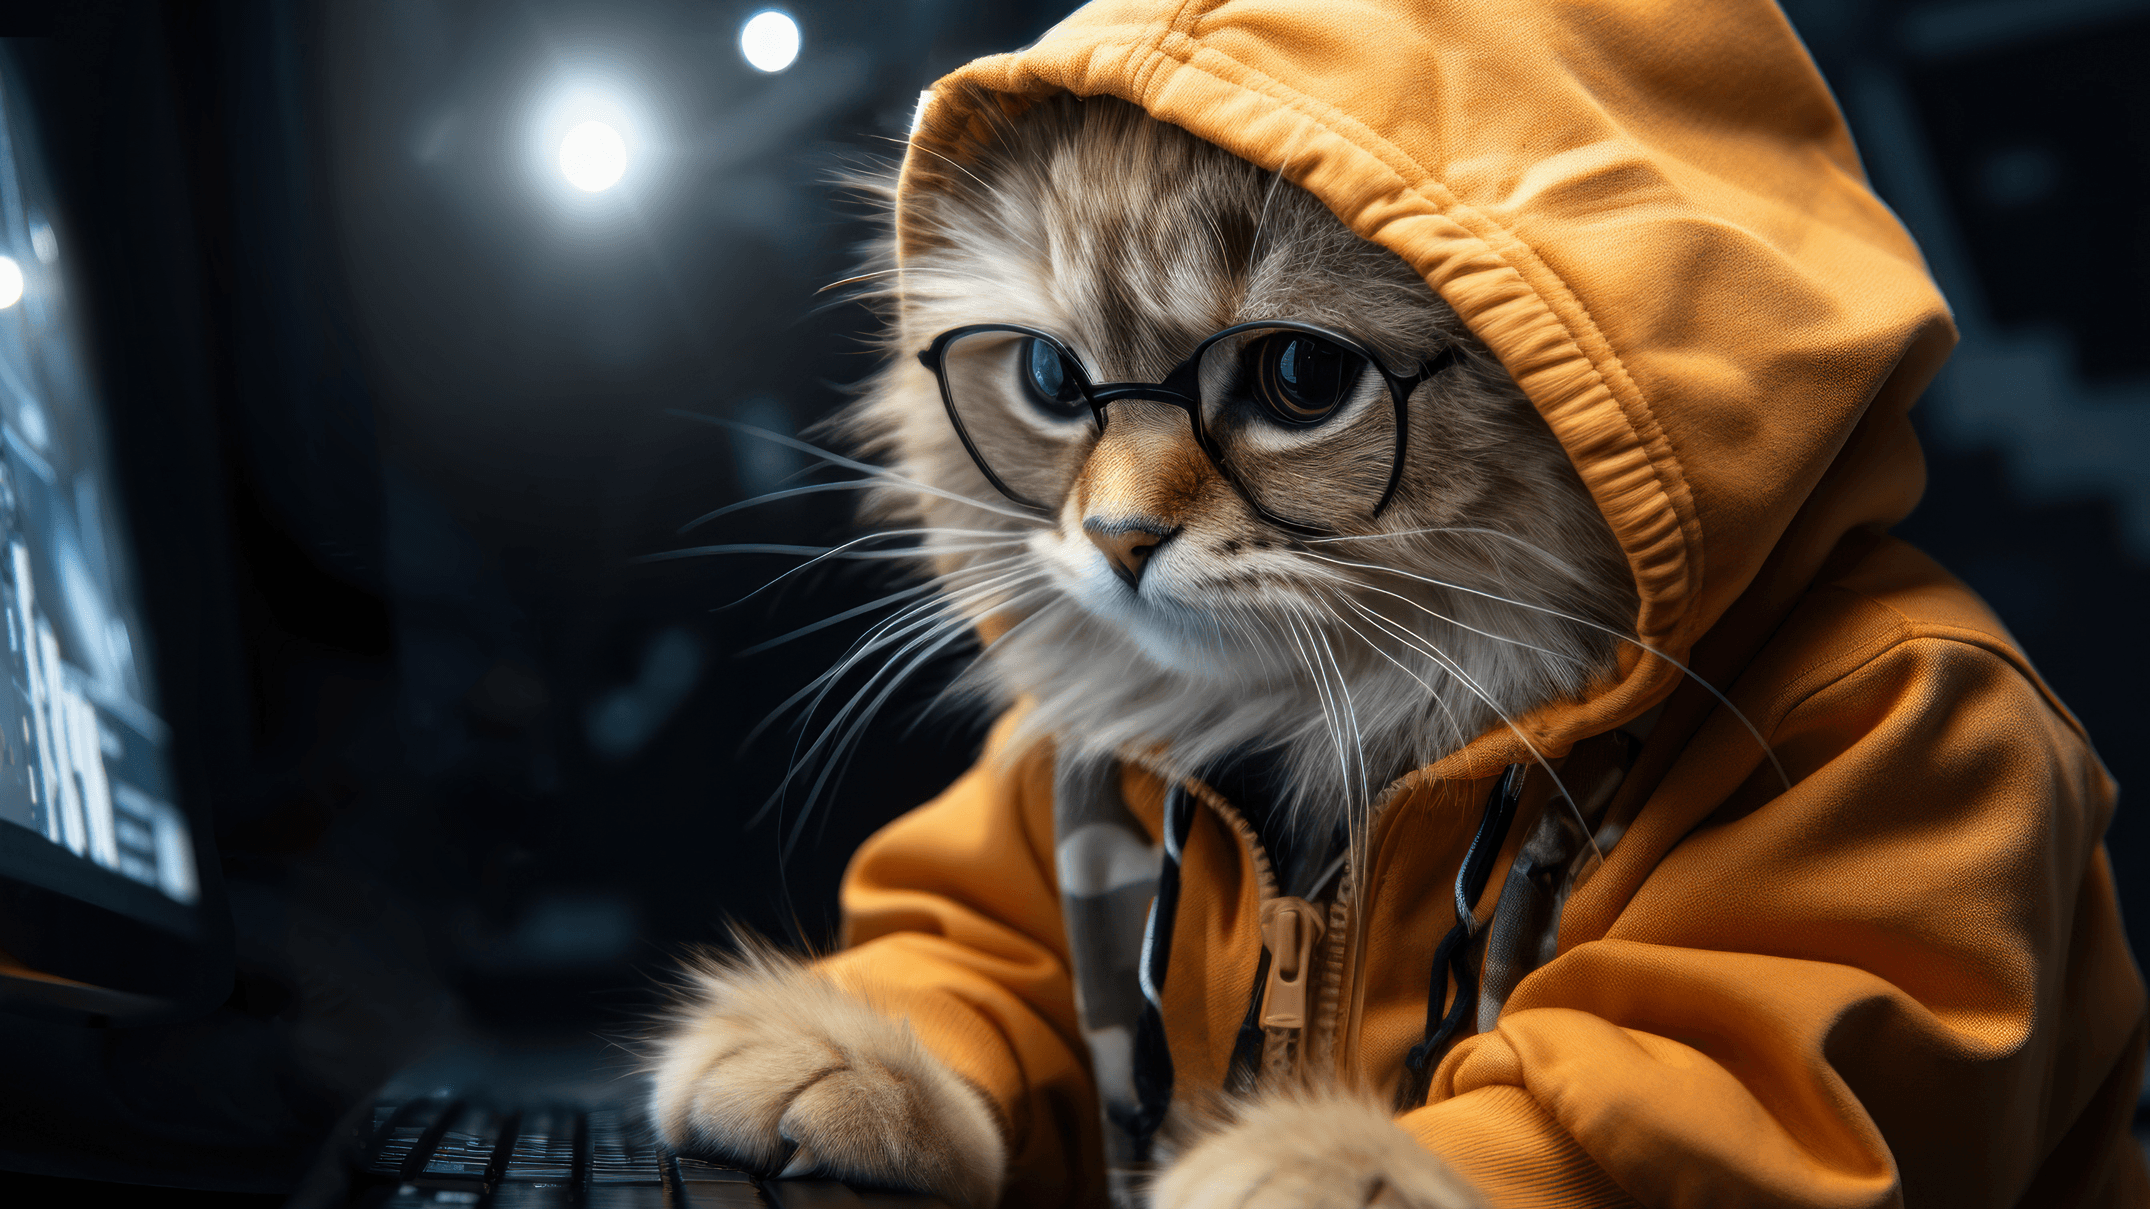 cat programmer